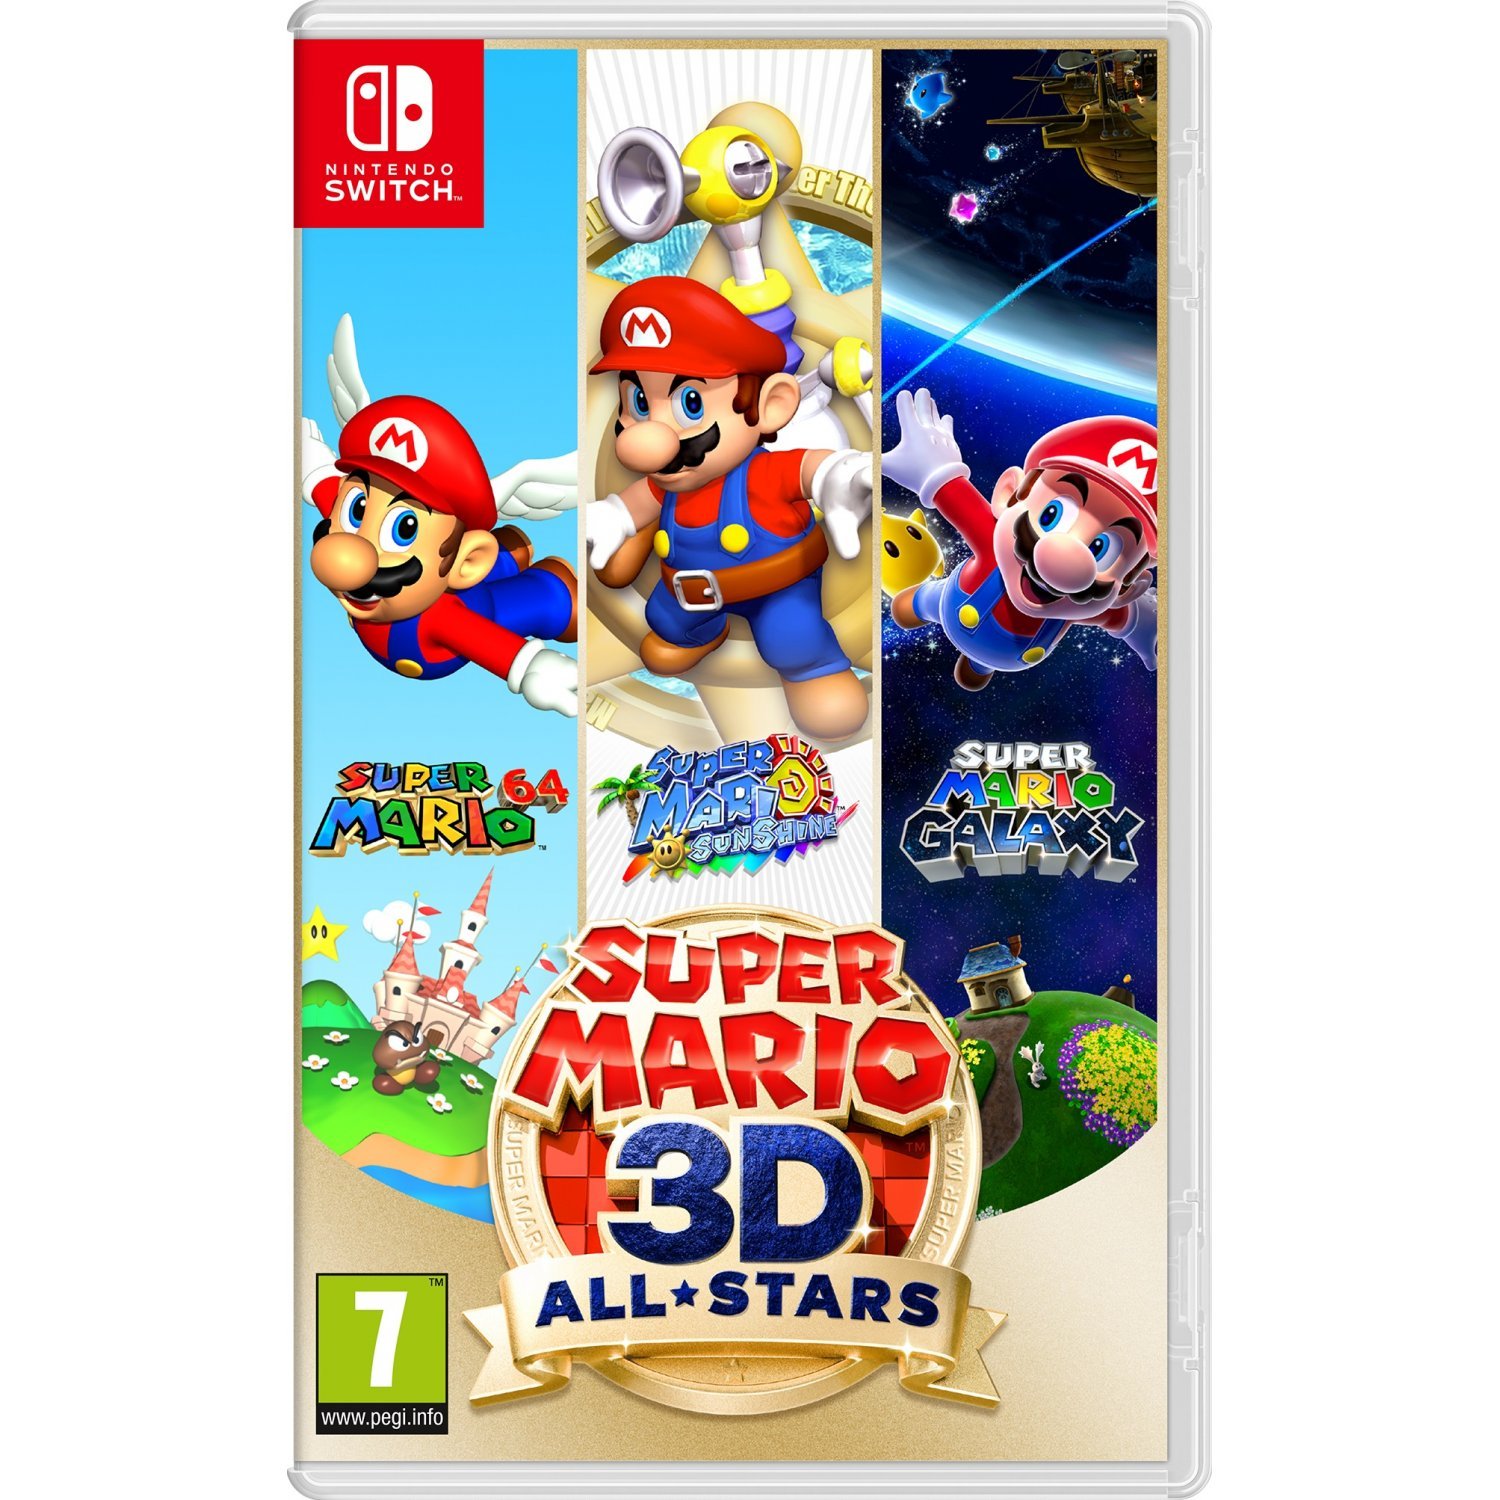 Super Mario 3D All-Stars (UK, SE, DK, FI) von Nintendo